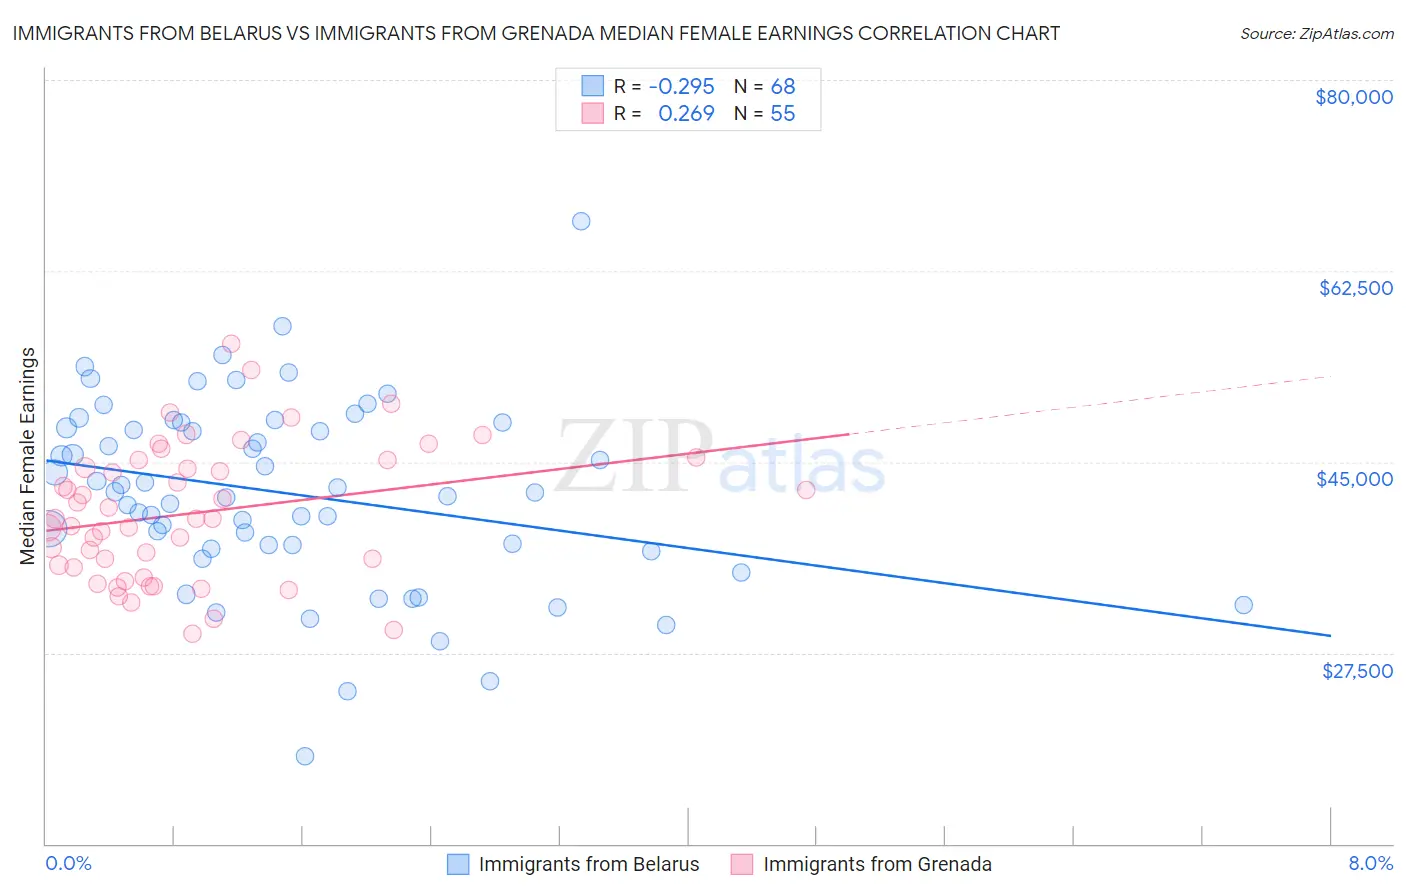 Immigrants from Belarus vs Immigrants from Grenada Median Female Earnings